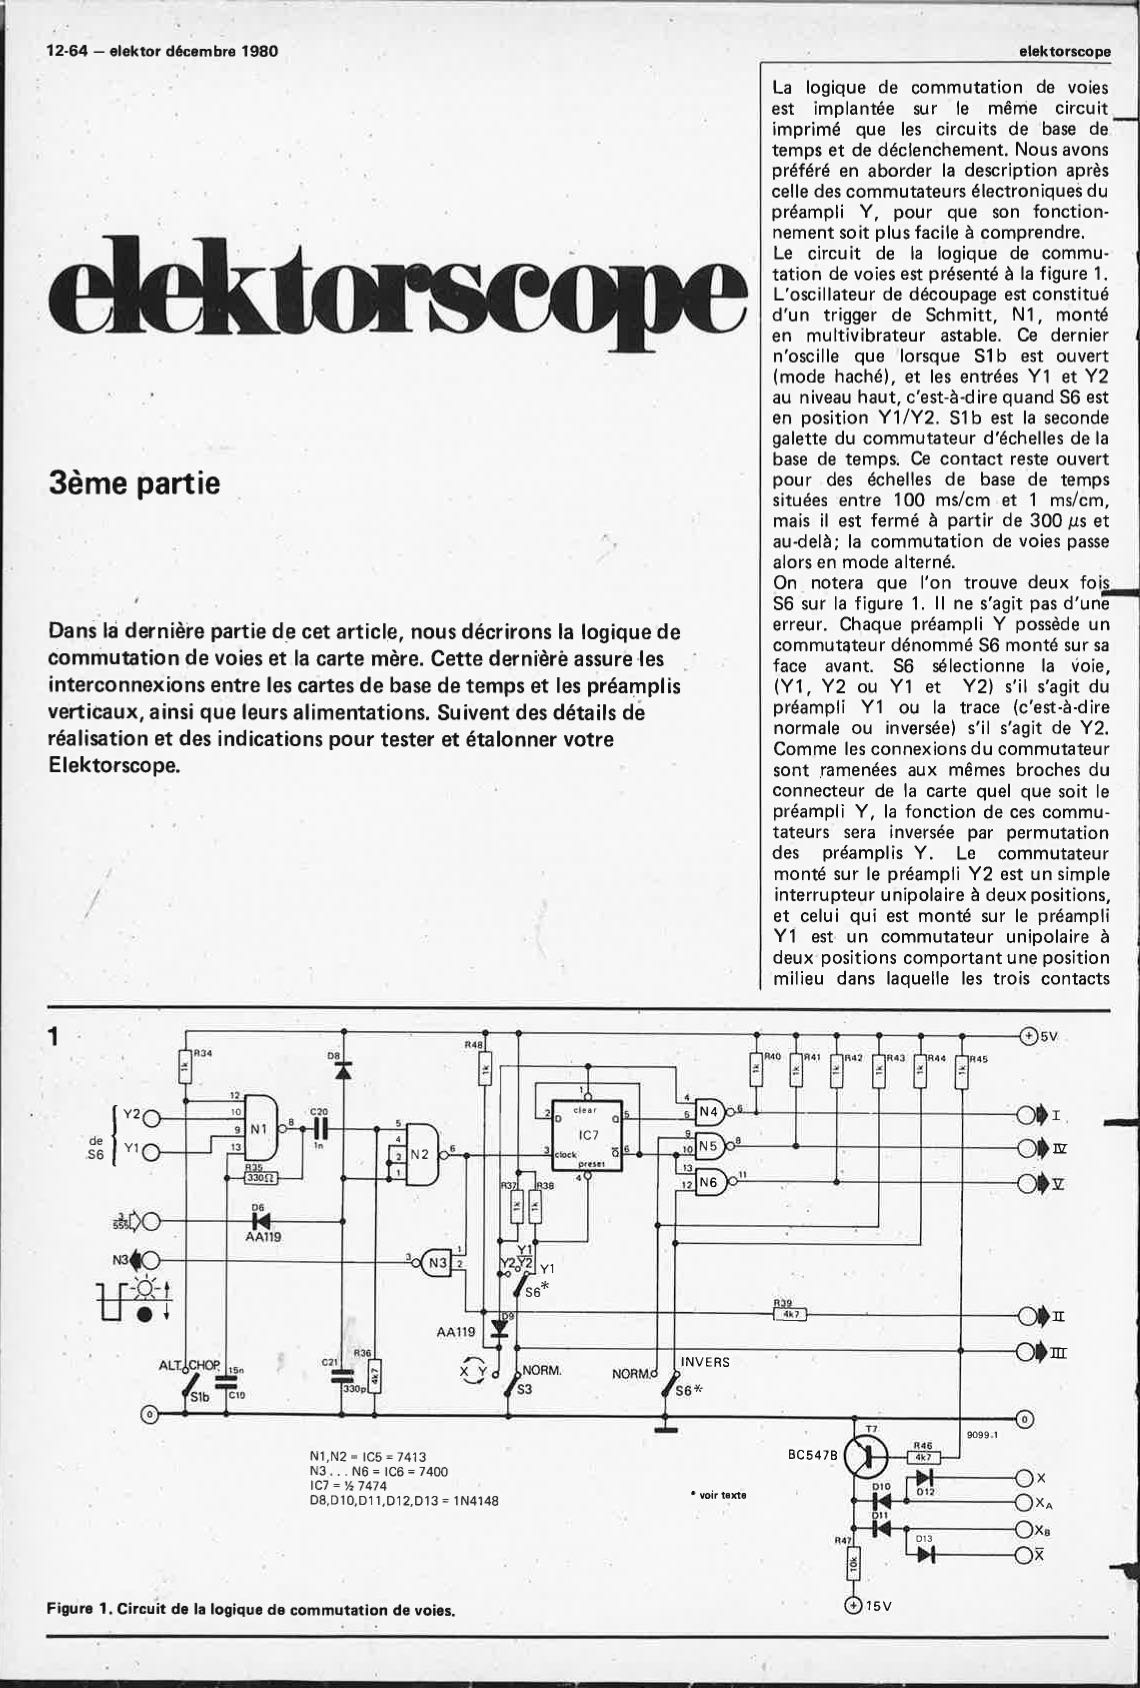 Elektorscope 3